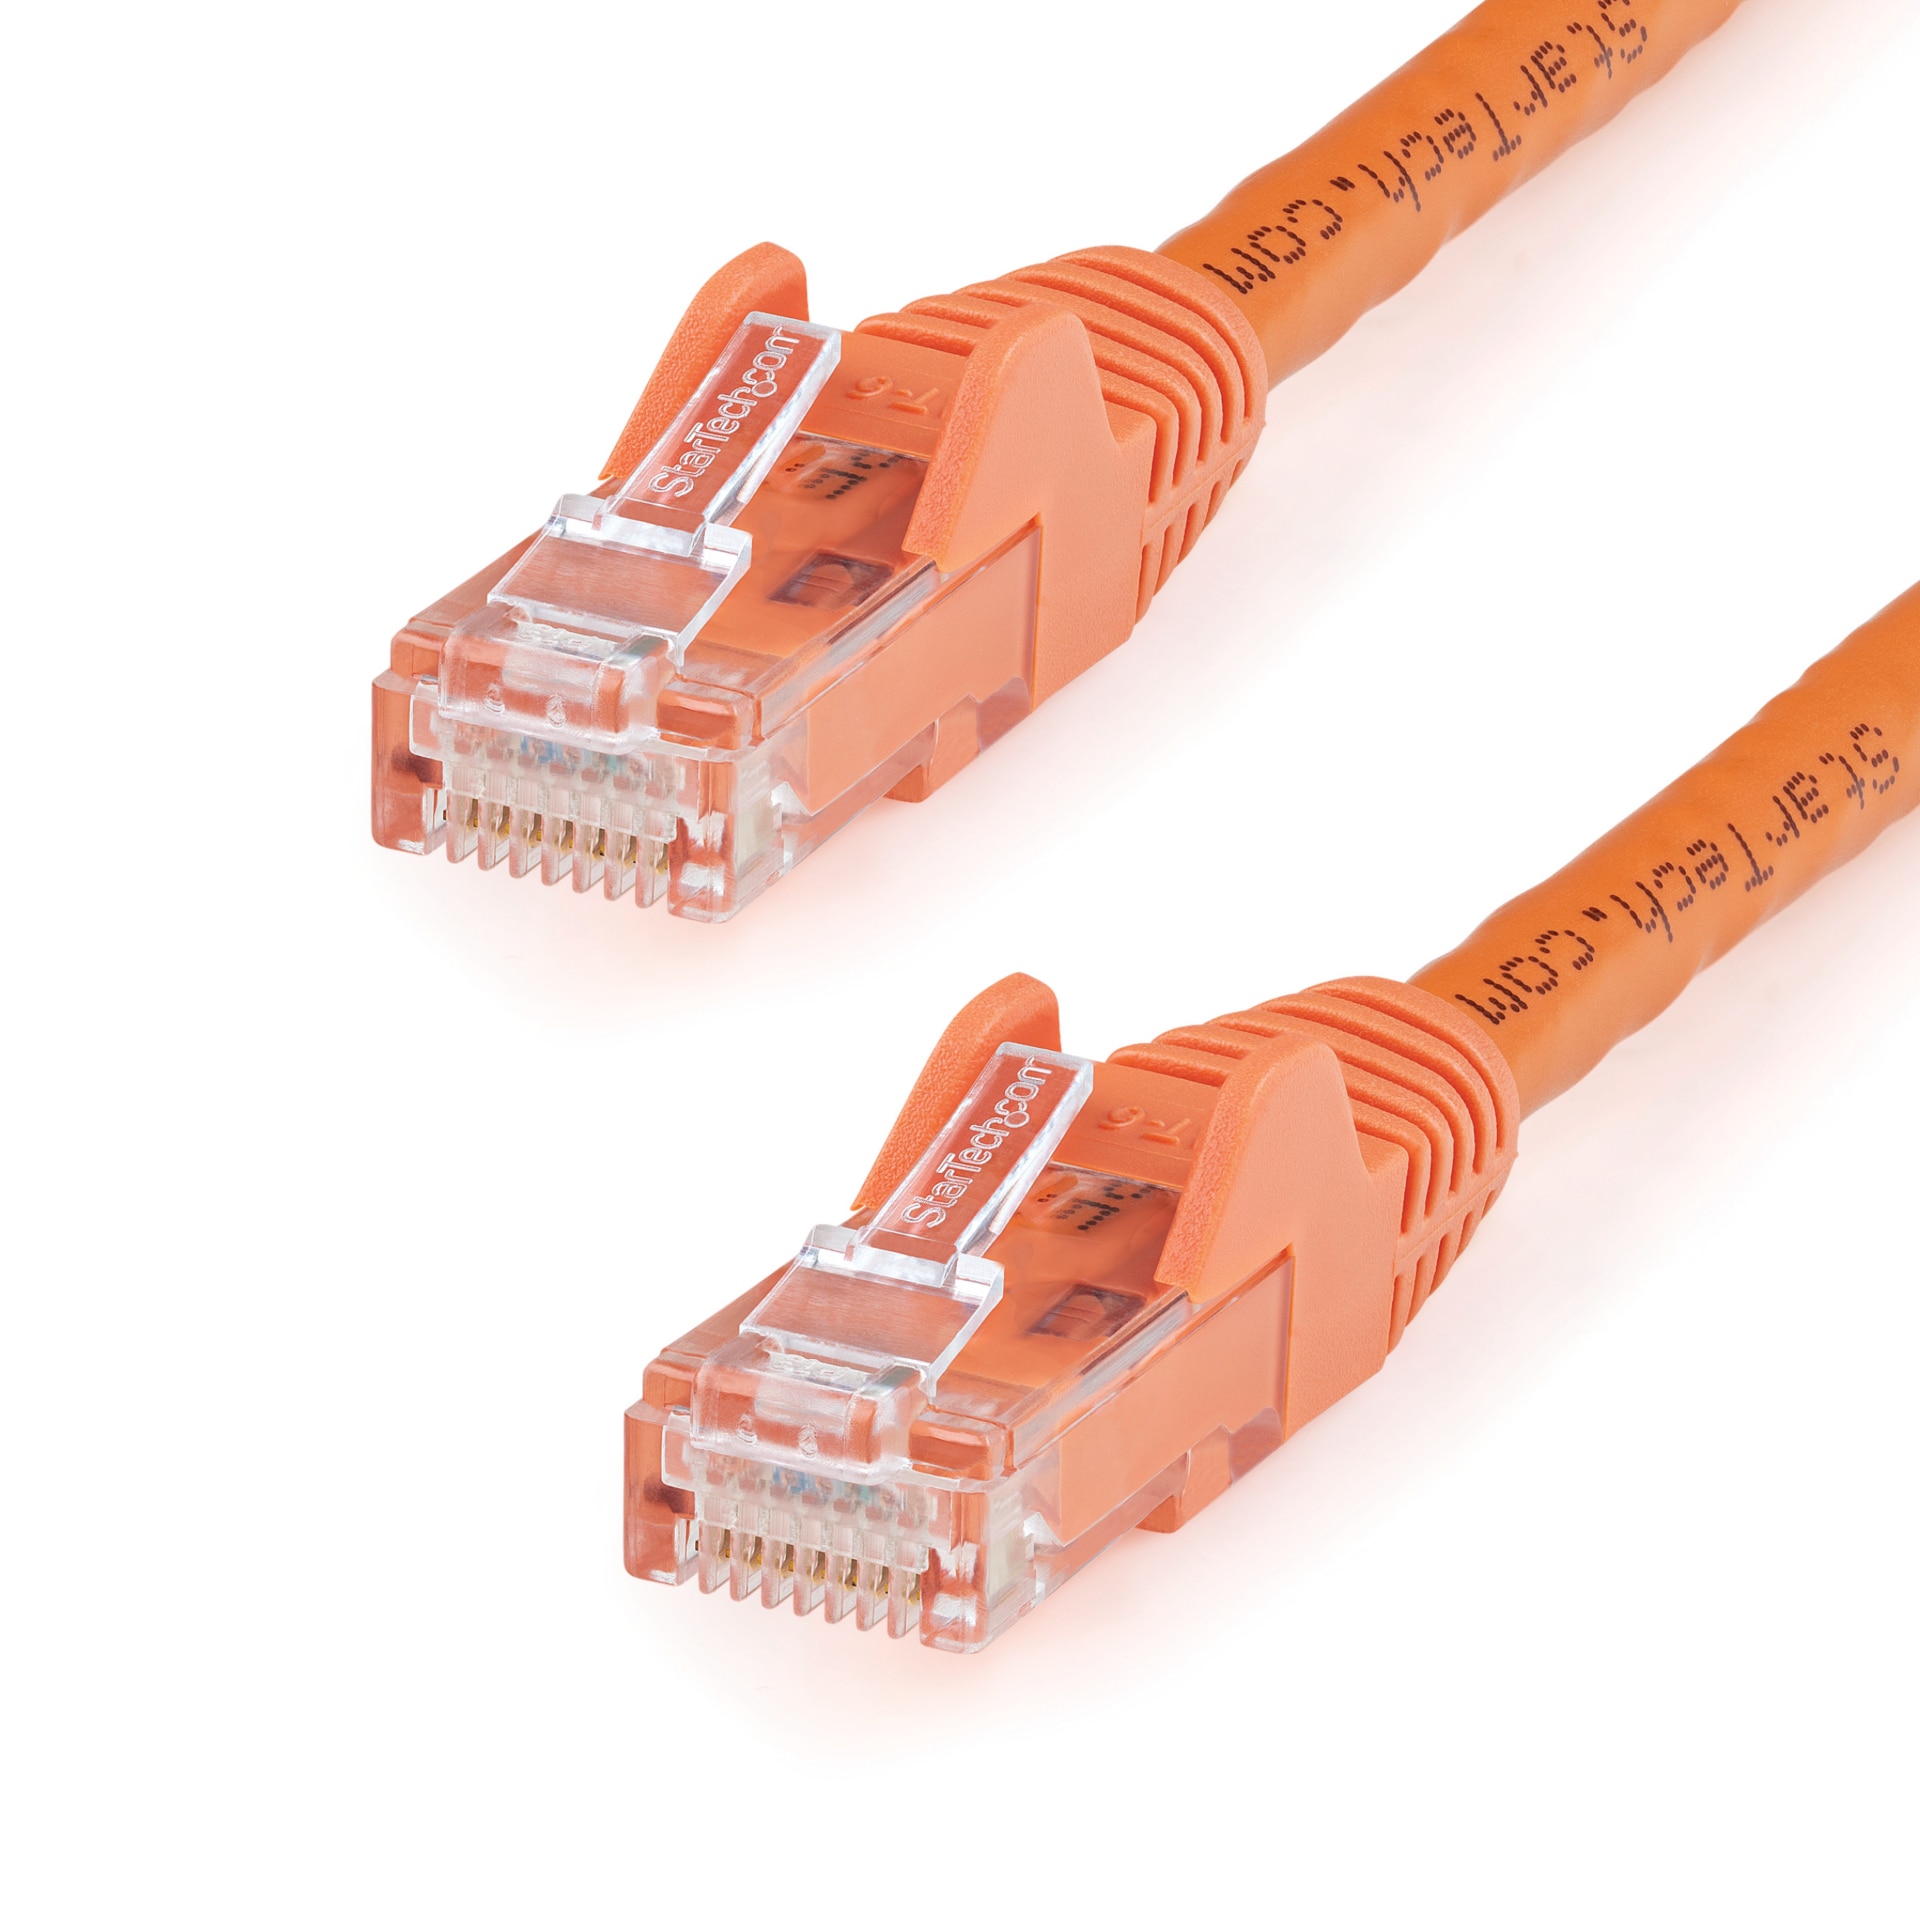 StarTech.com CAT6 Ethernet Cable 20' Orange 650MHz PoE Snagless Patch Cord